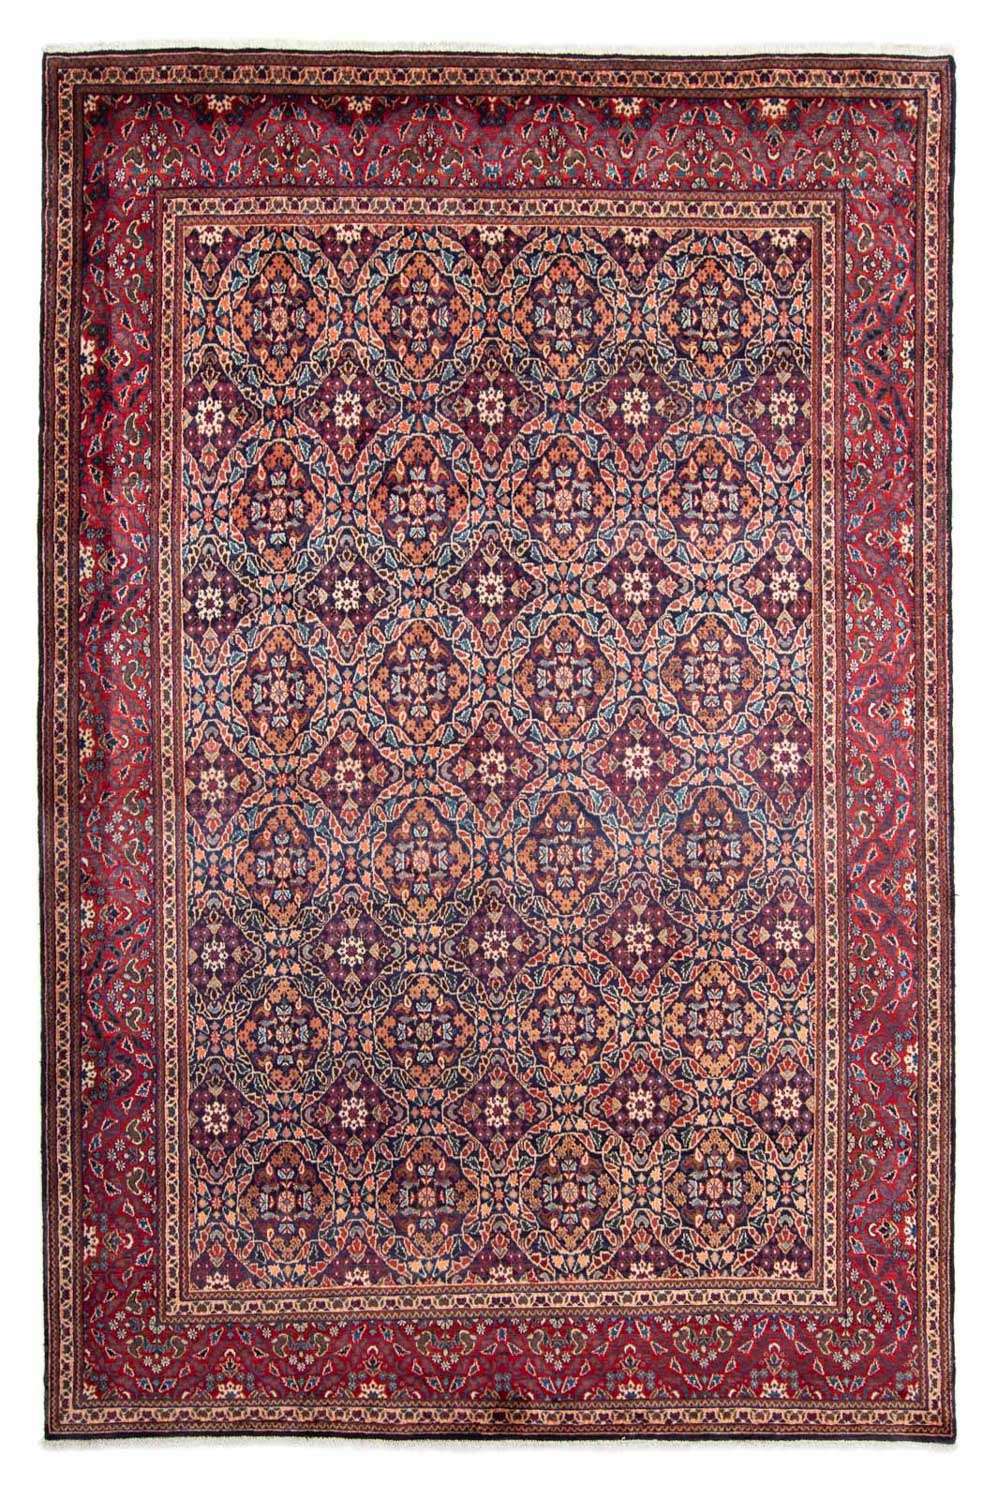 Alfombra persa - Clásica - 314 x 214 cm - rojo claro